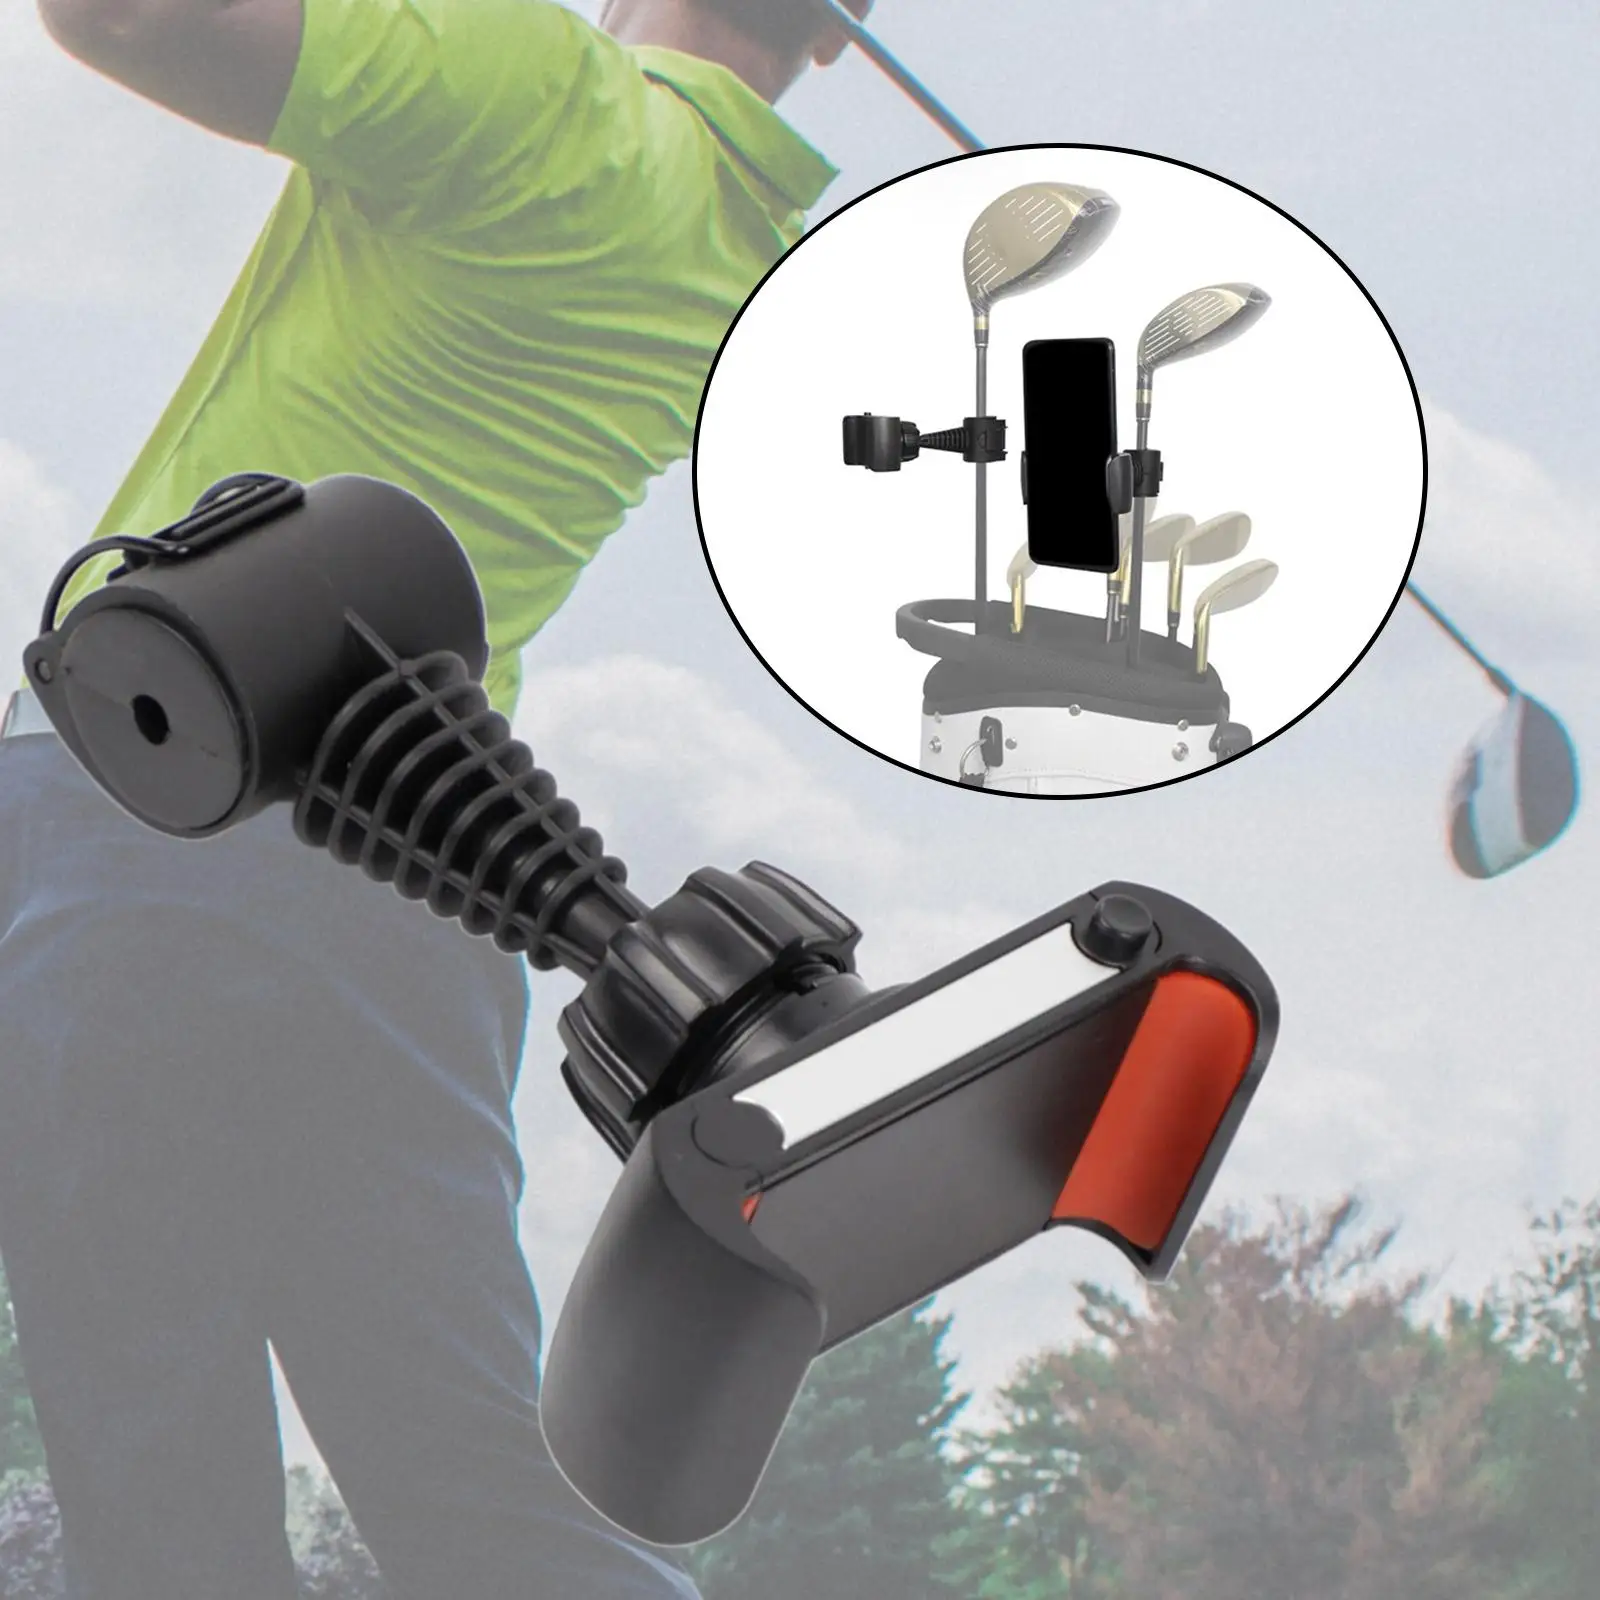 Golf Phone Holder Mount Multifunction Sturdy 360 Degree Practical Bracket Clip for Mobile Swing Recording Putting Short Game